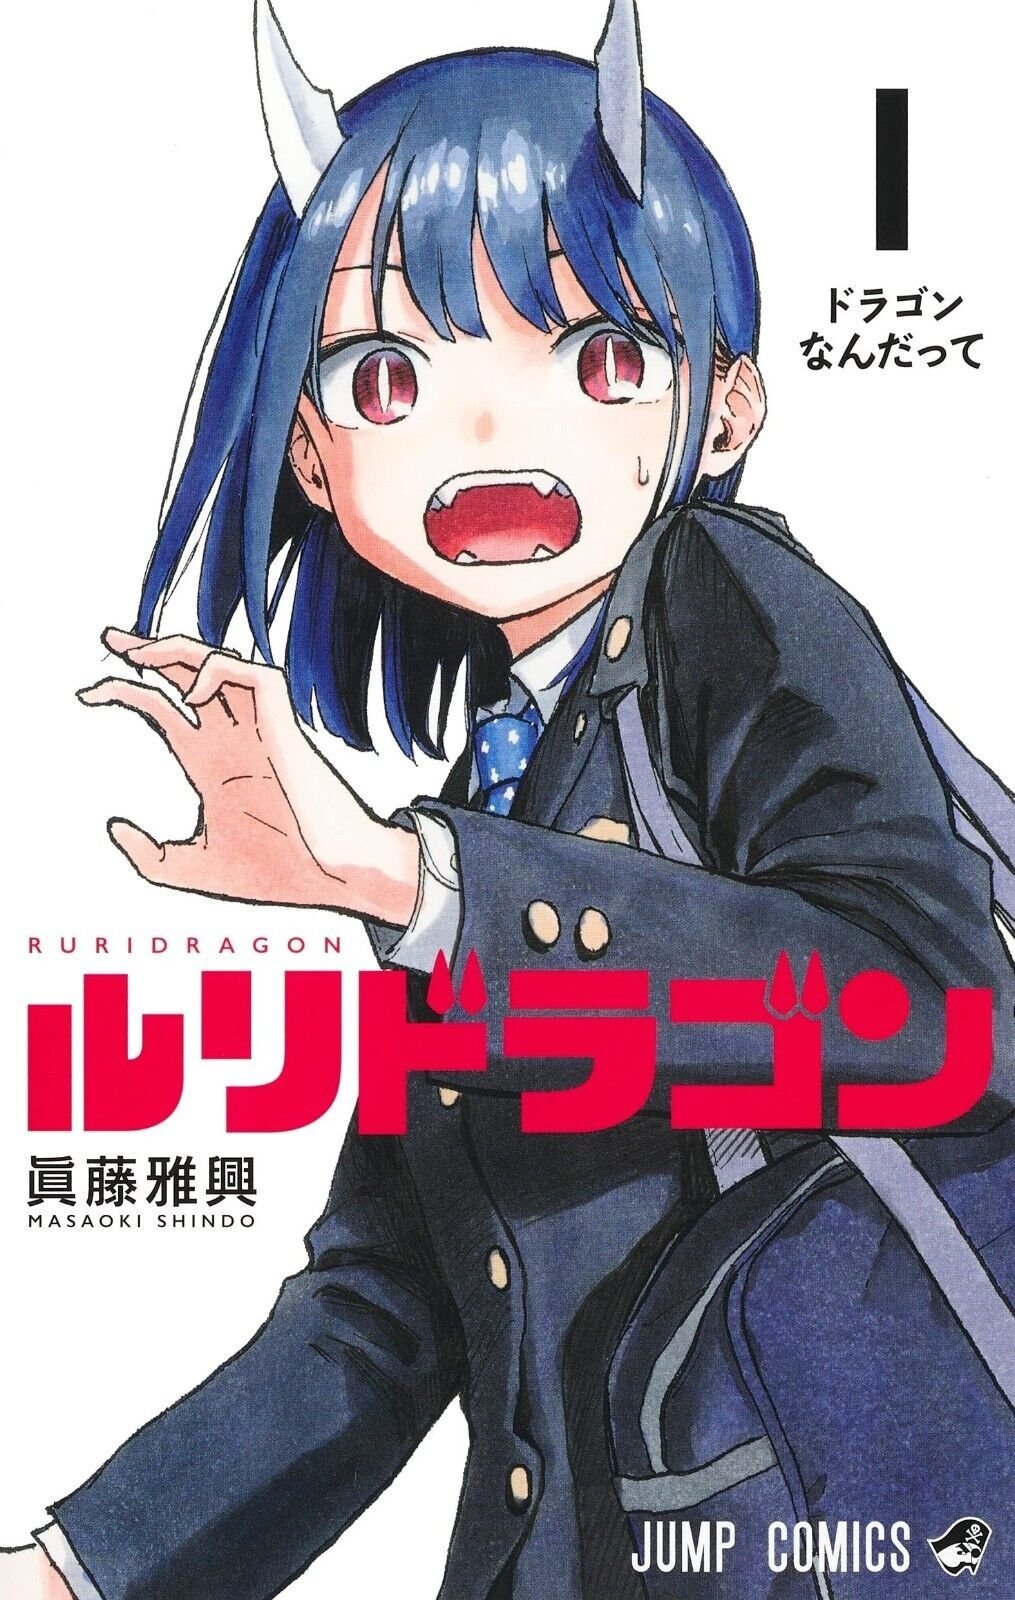 Manga Mogura RE on X: Oshi no Ko Anime Season 2 Announced